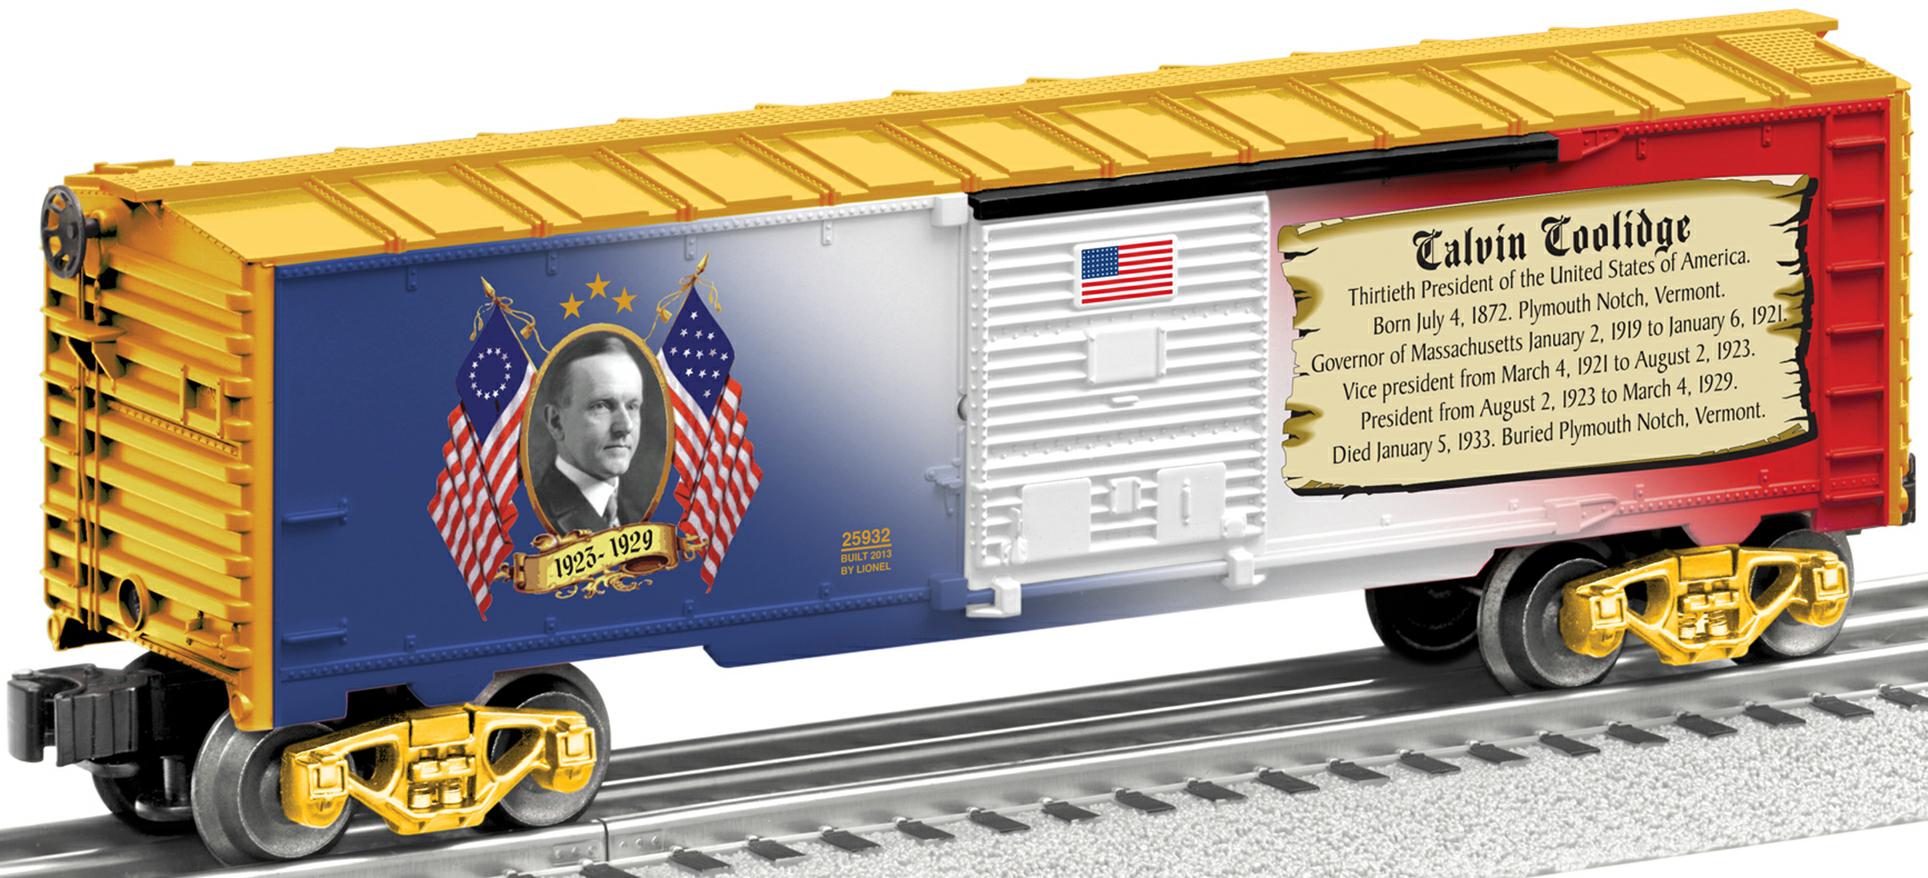 Calvin Coolidge boxcar image